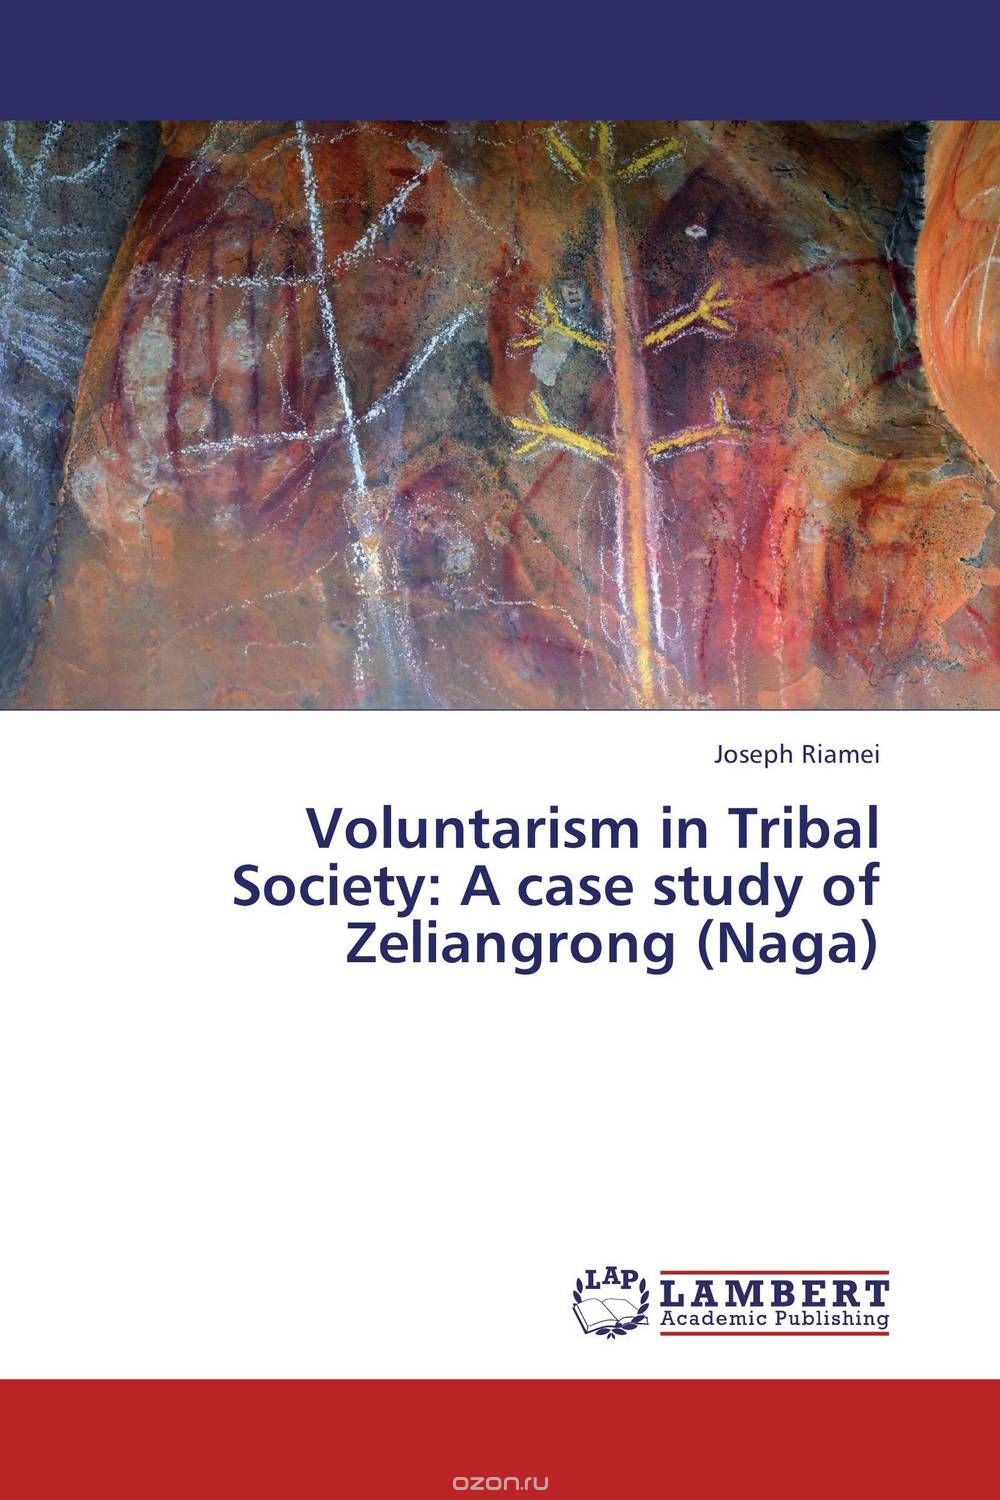 Скачать книгу "Voluntarism in Tribal Society: A case study of Zeliangrong (Naga)"